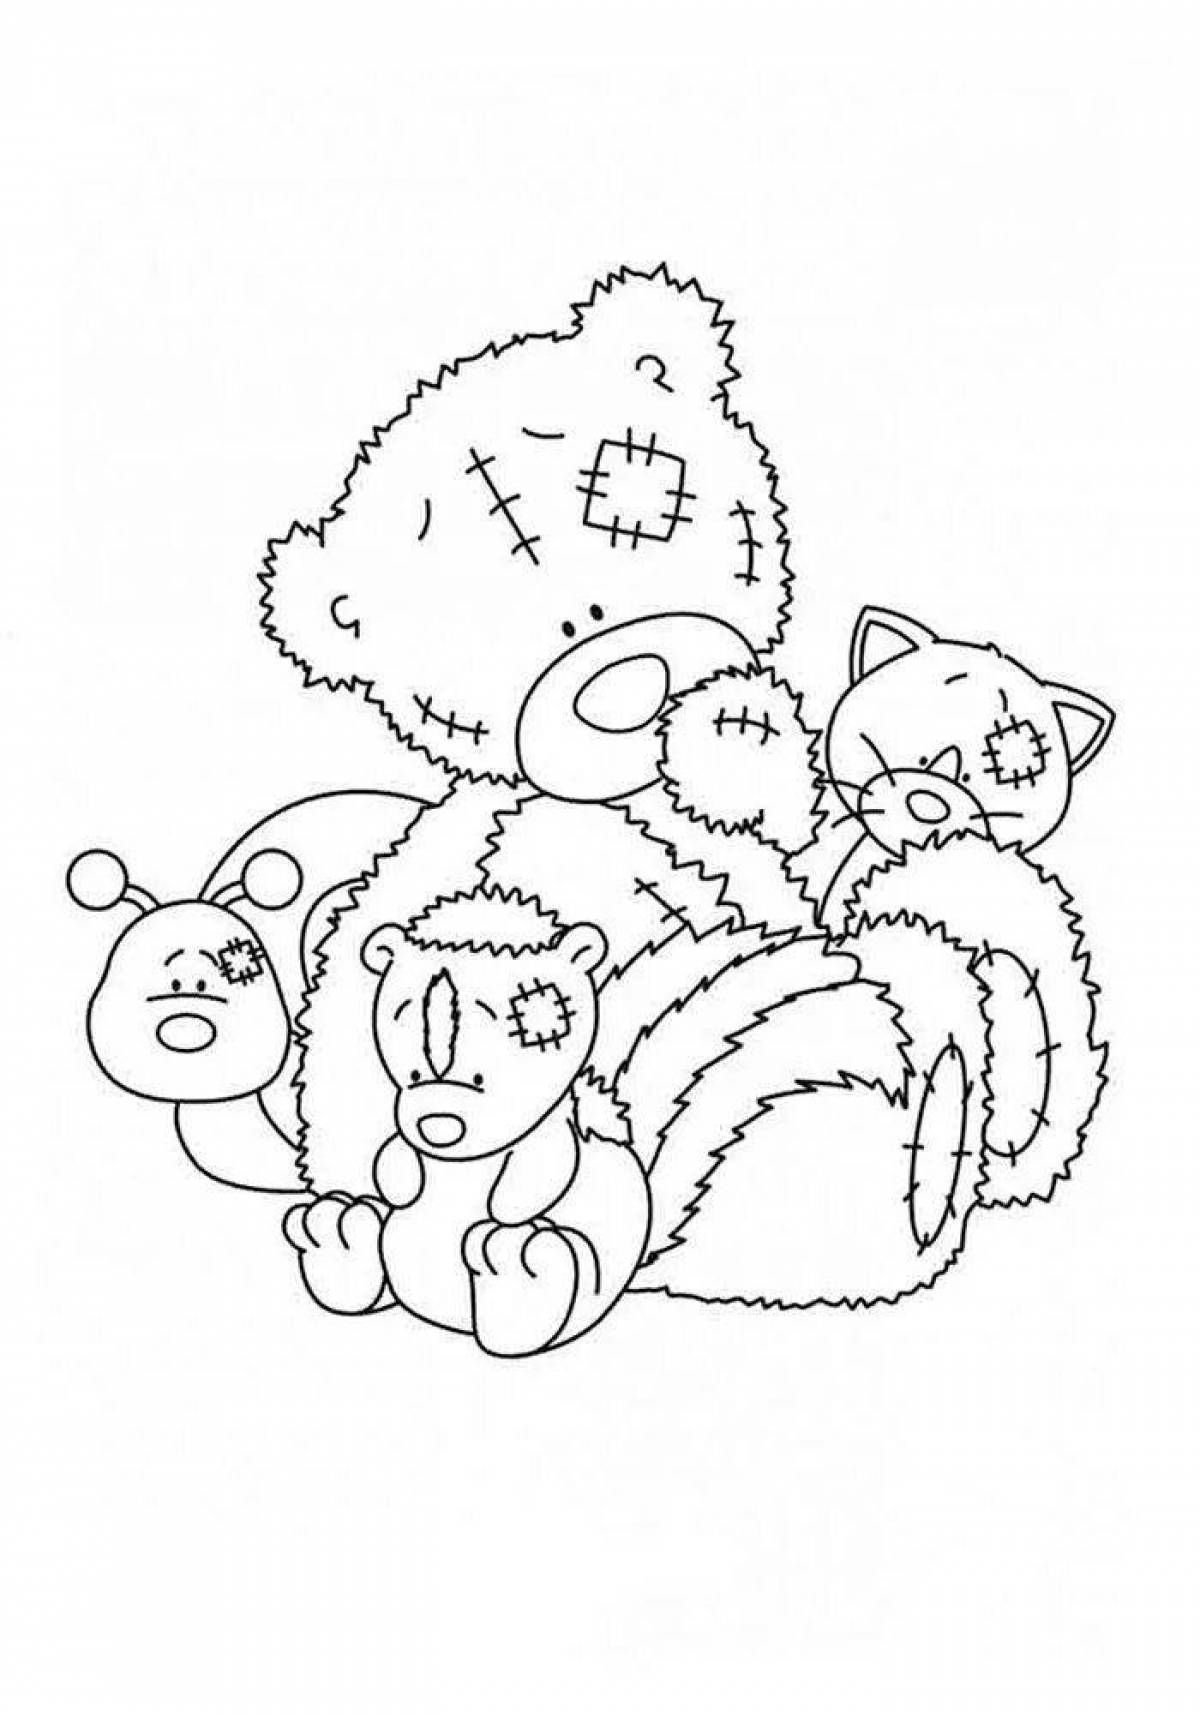 Coloring huggable teddy bear